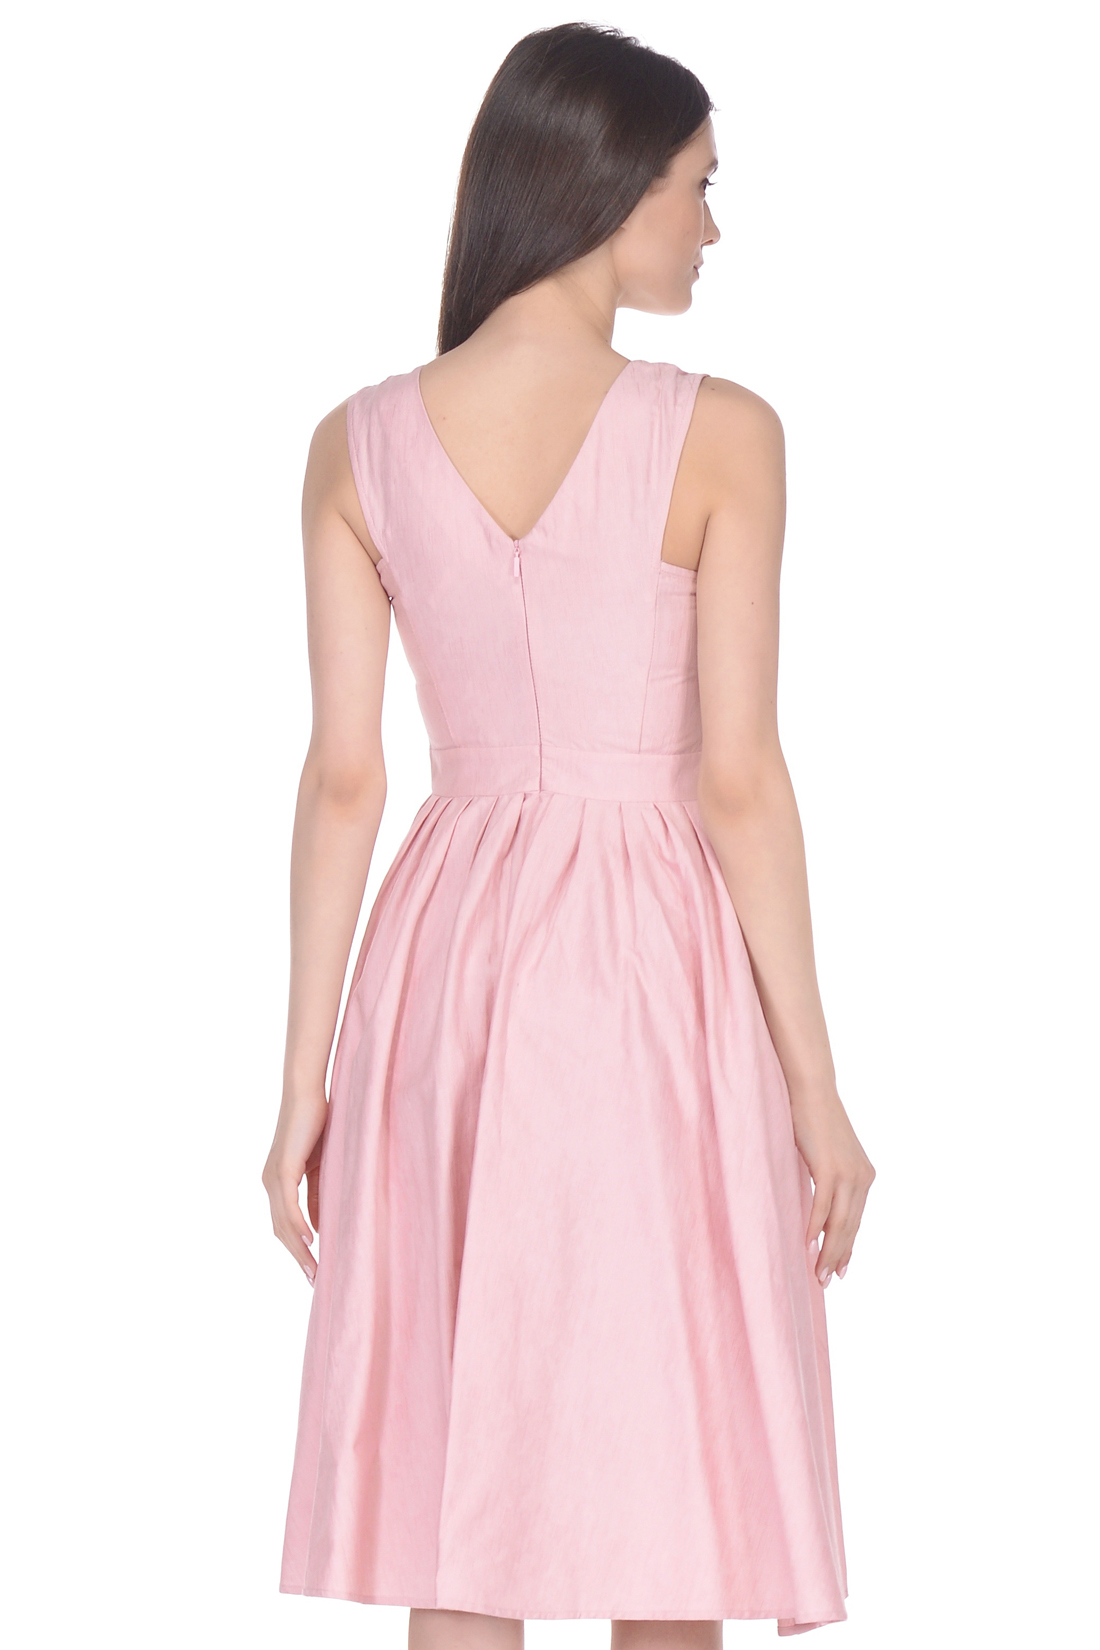 Платье силуэта new look (арт. baon B458043), размер S, цвет розовый Платье силуэта new look (арт. baon B458043) - фото 2